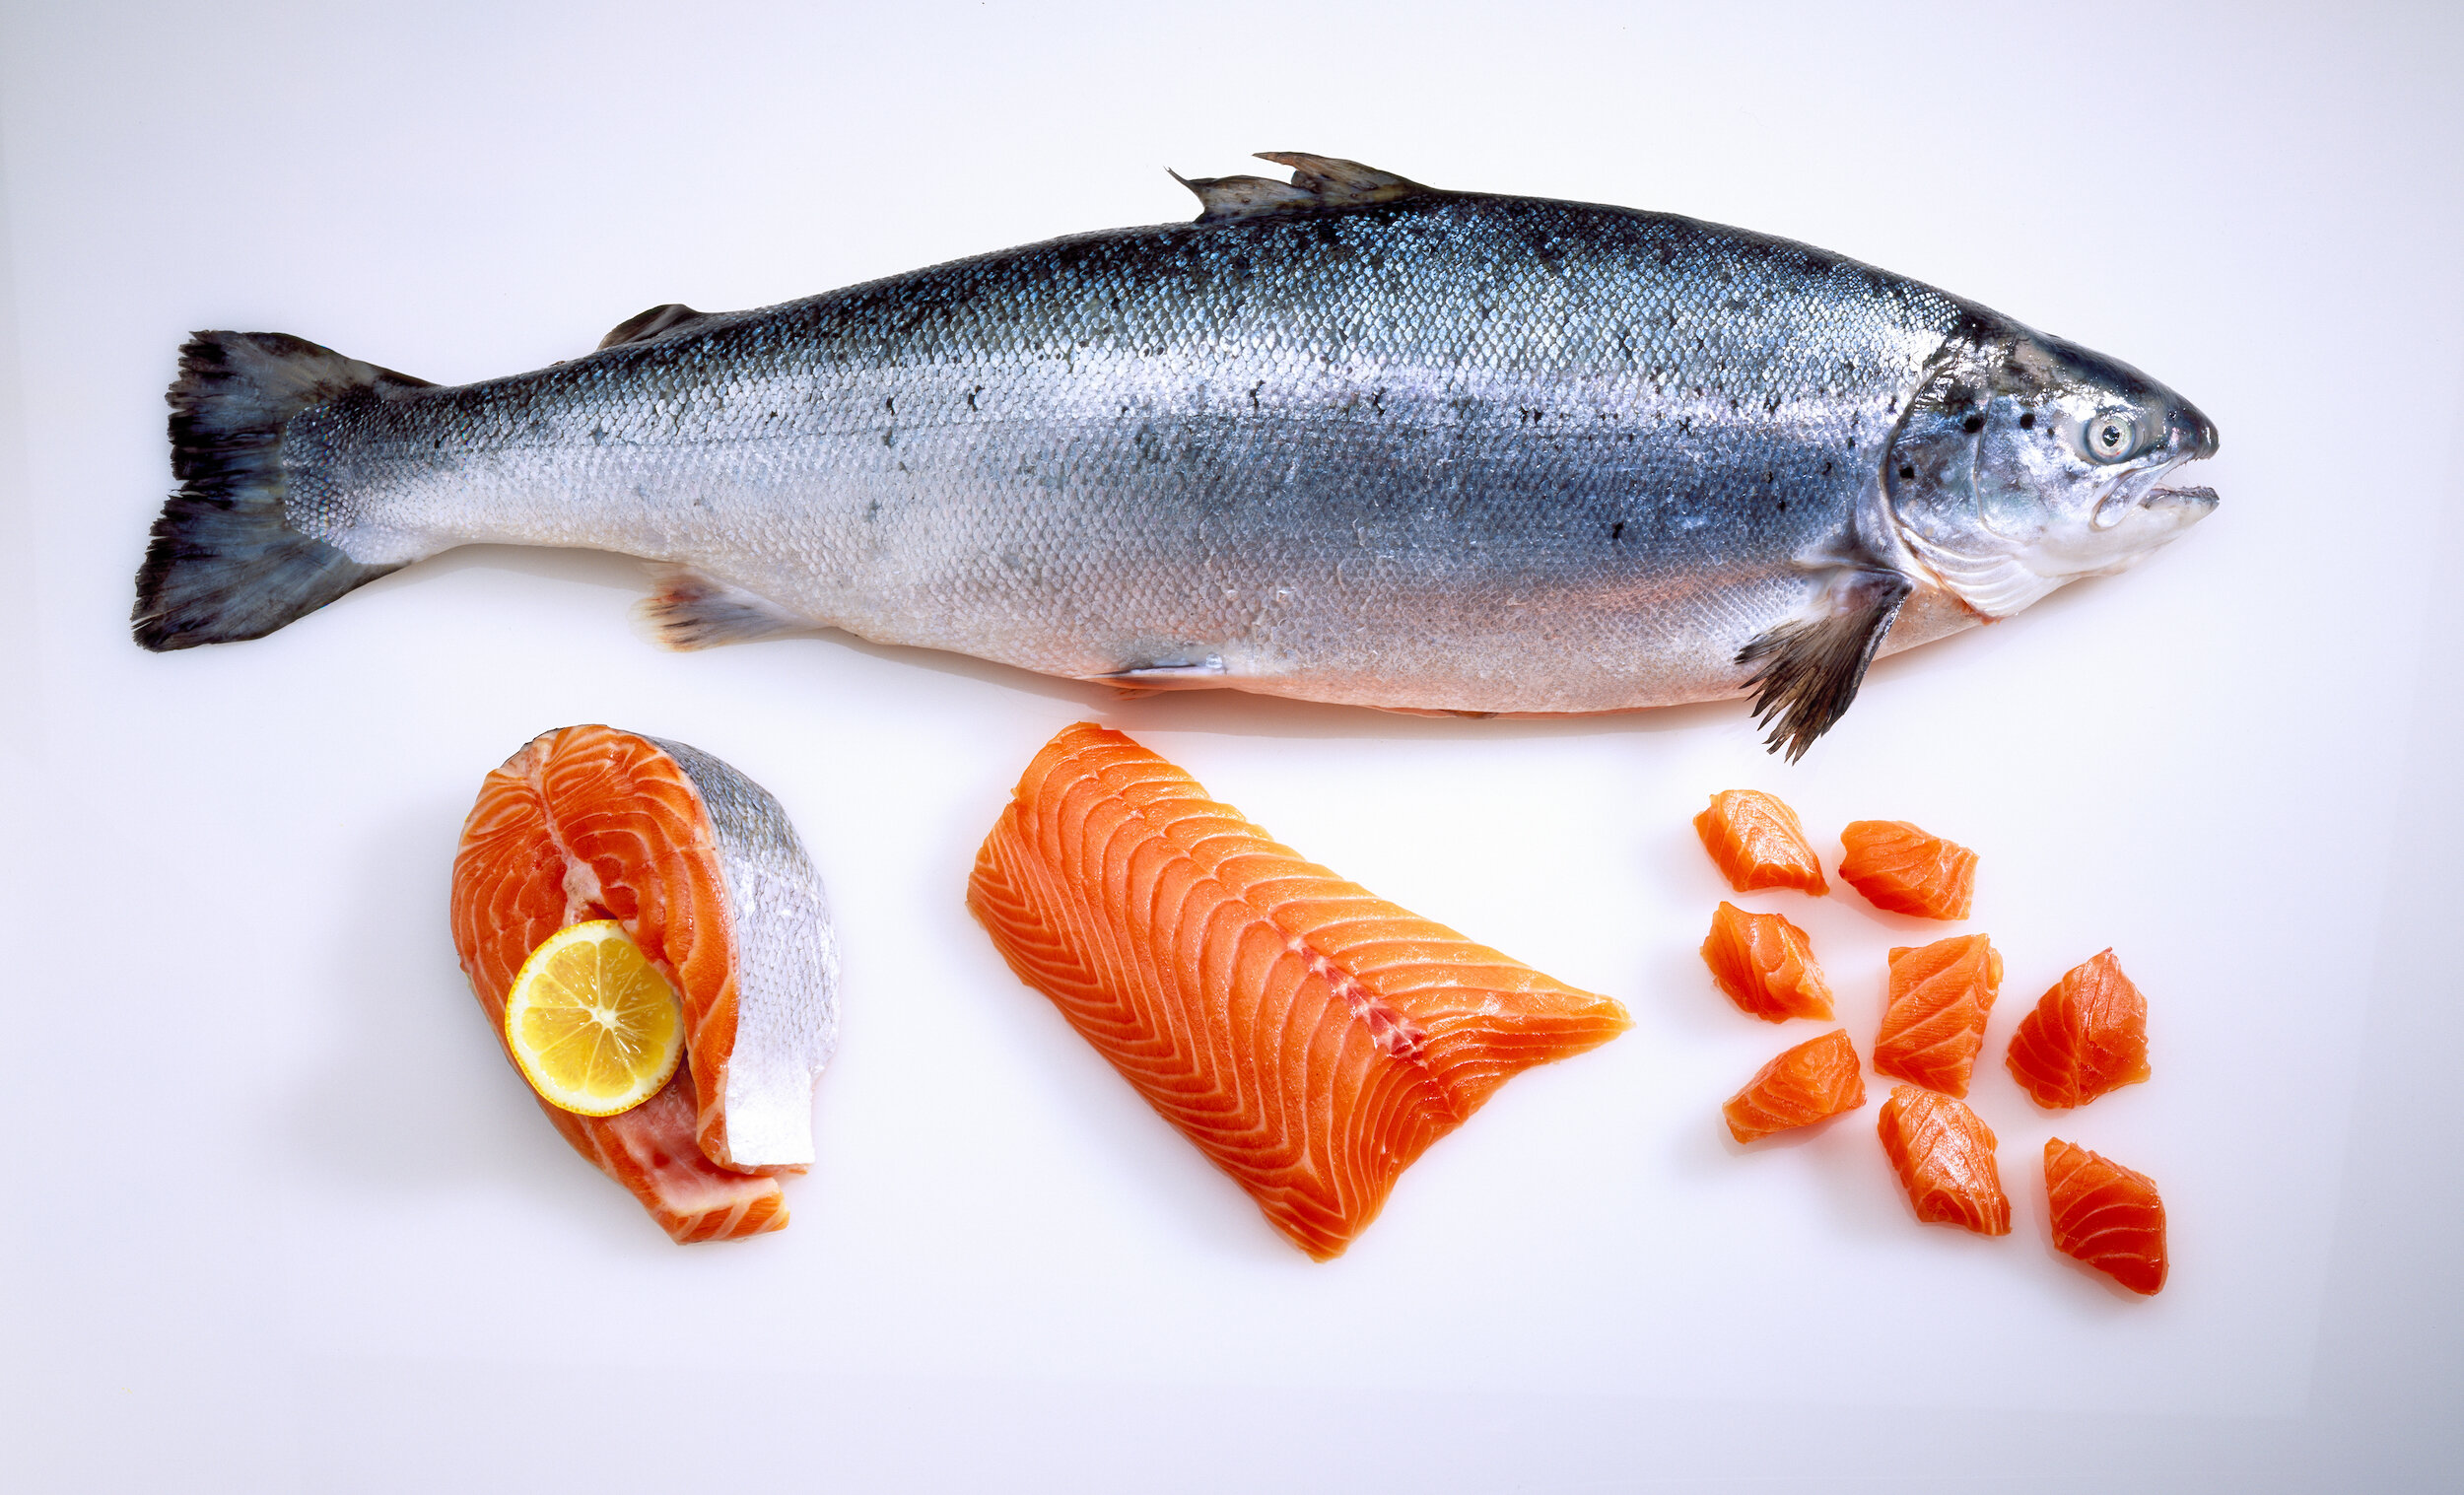 Valores nutricionales salmon